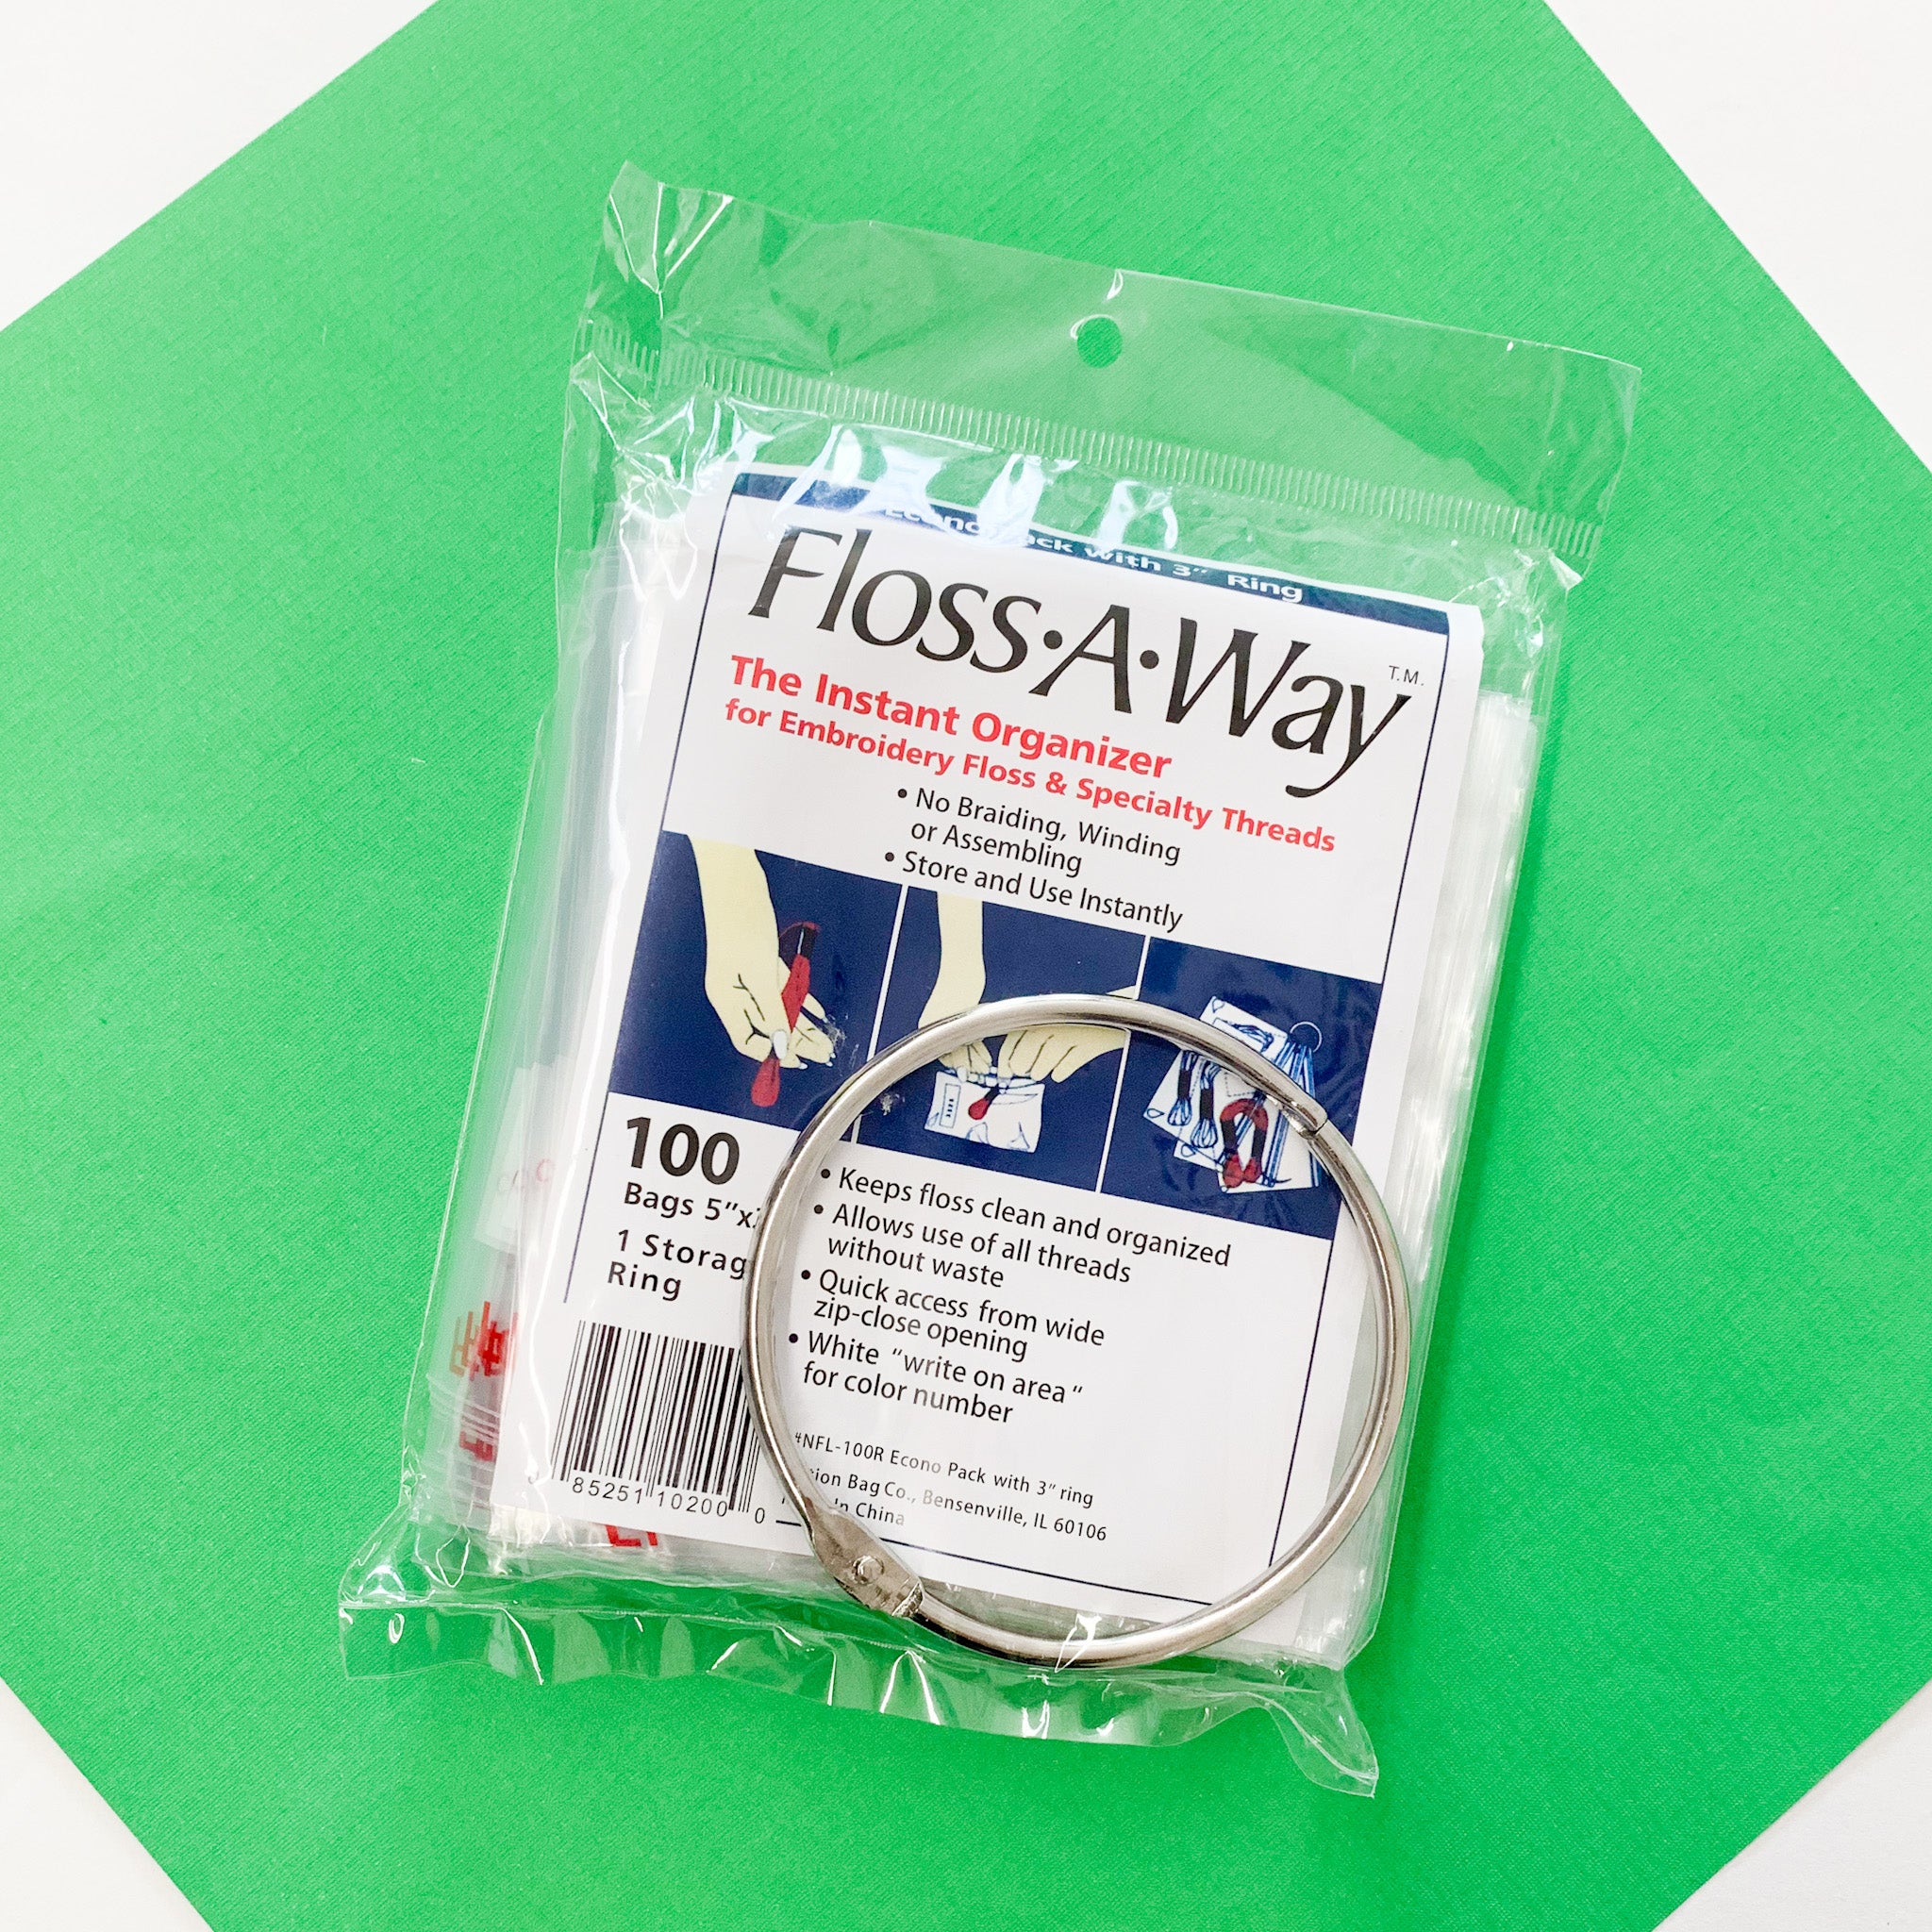 Floss-A-Way thread storage bags - Nimble Needle